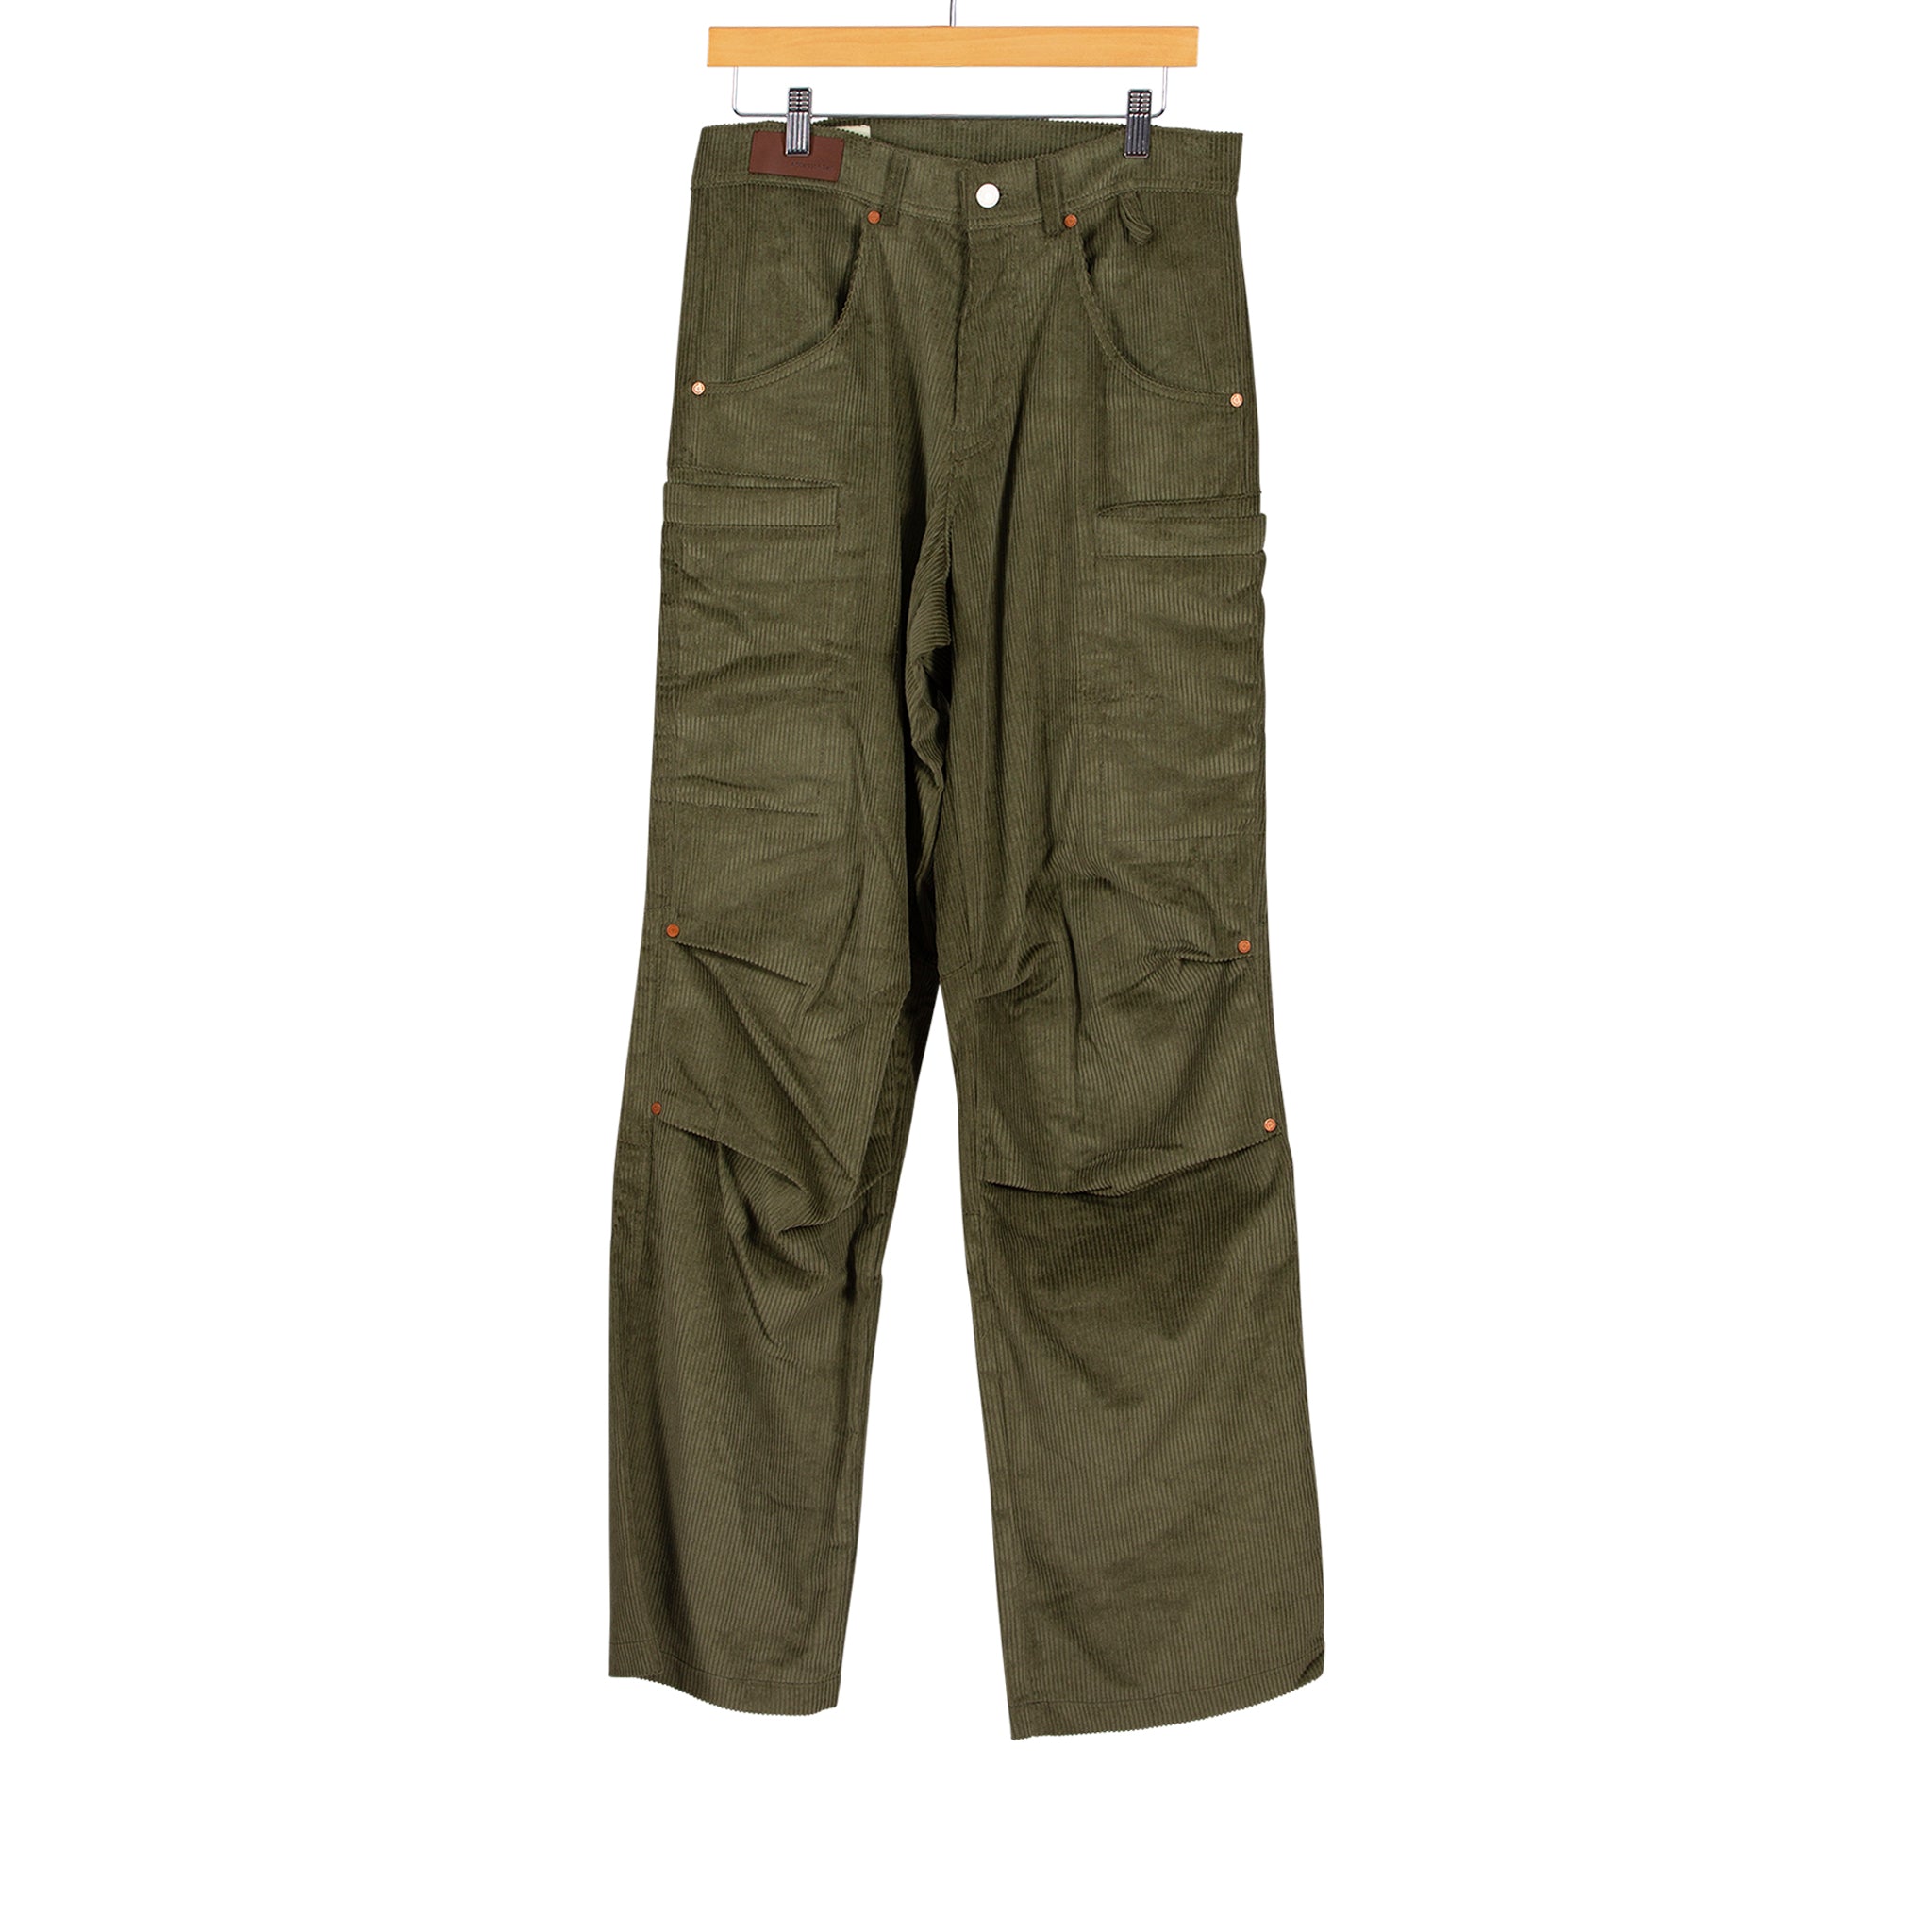 Kapital Wallaby cargo pants in green corduroy